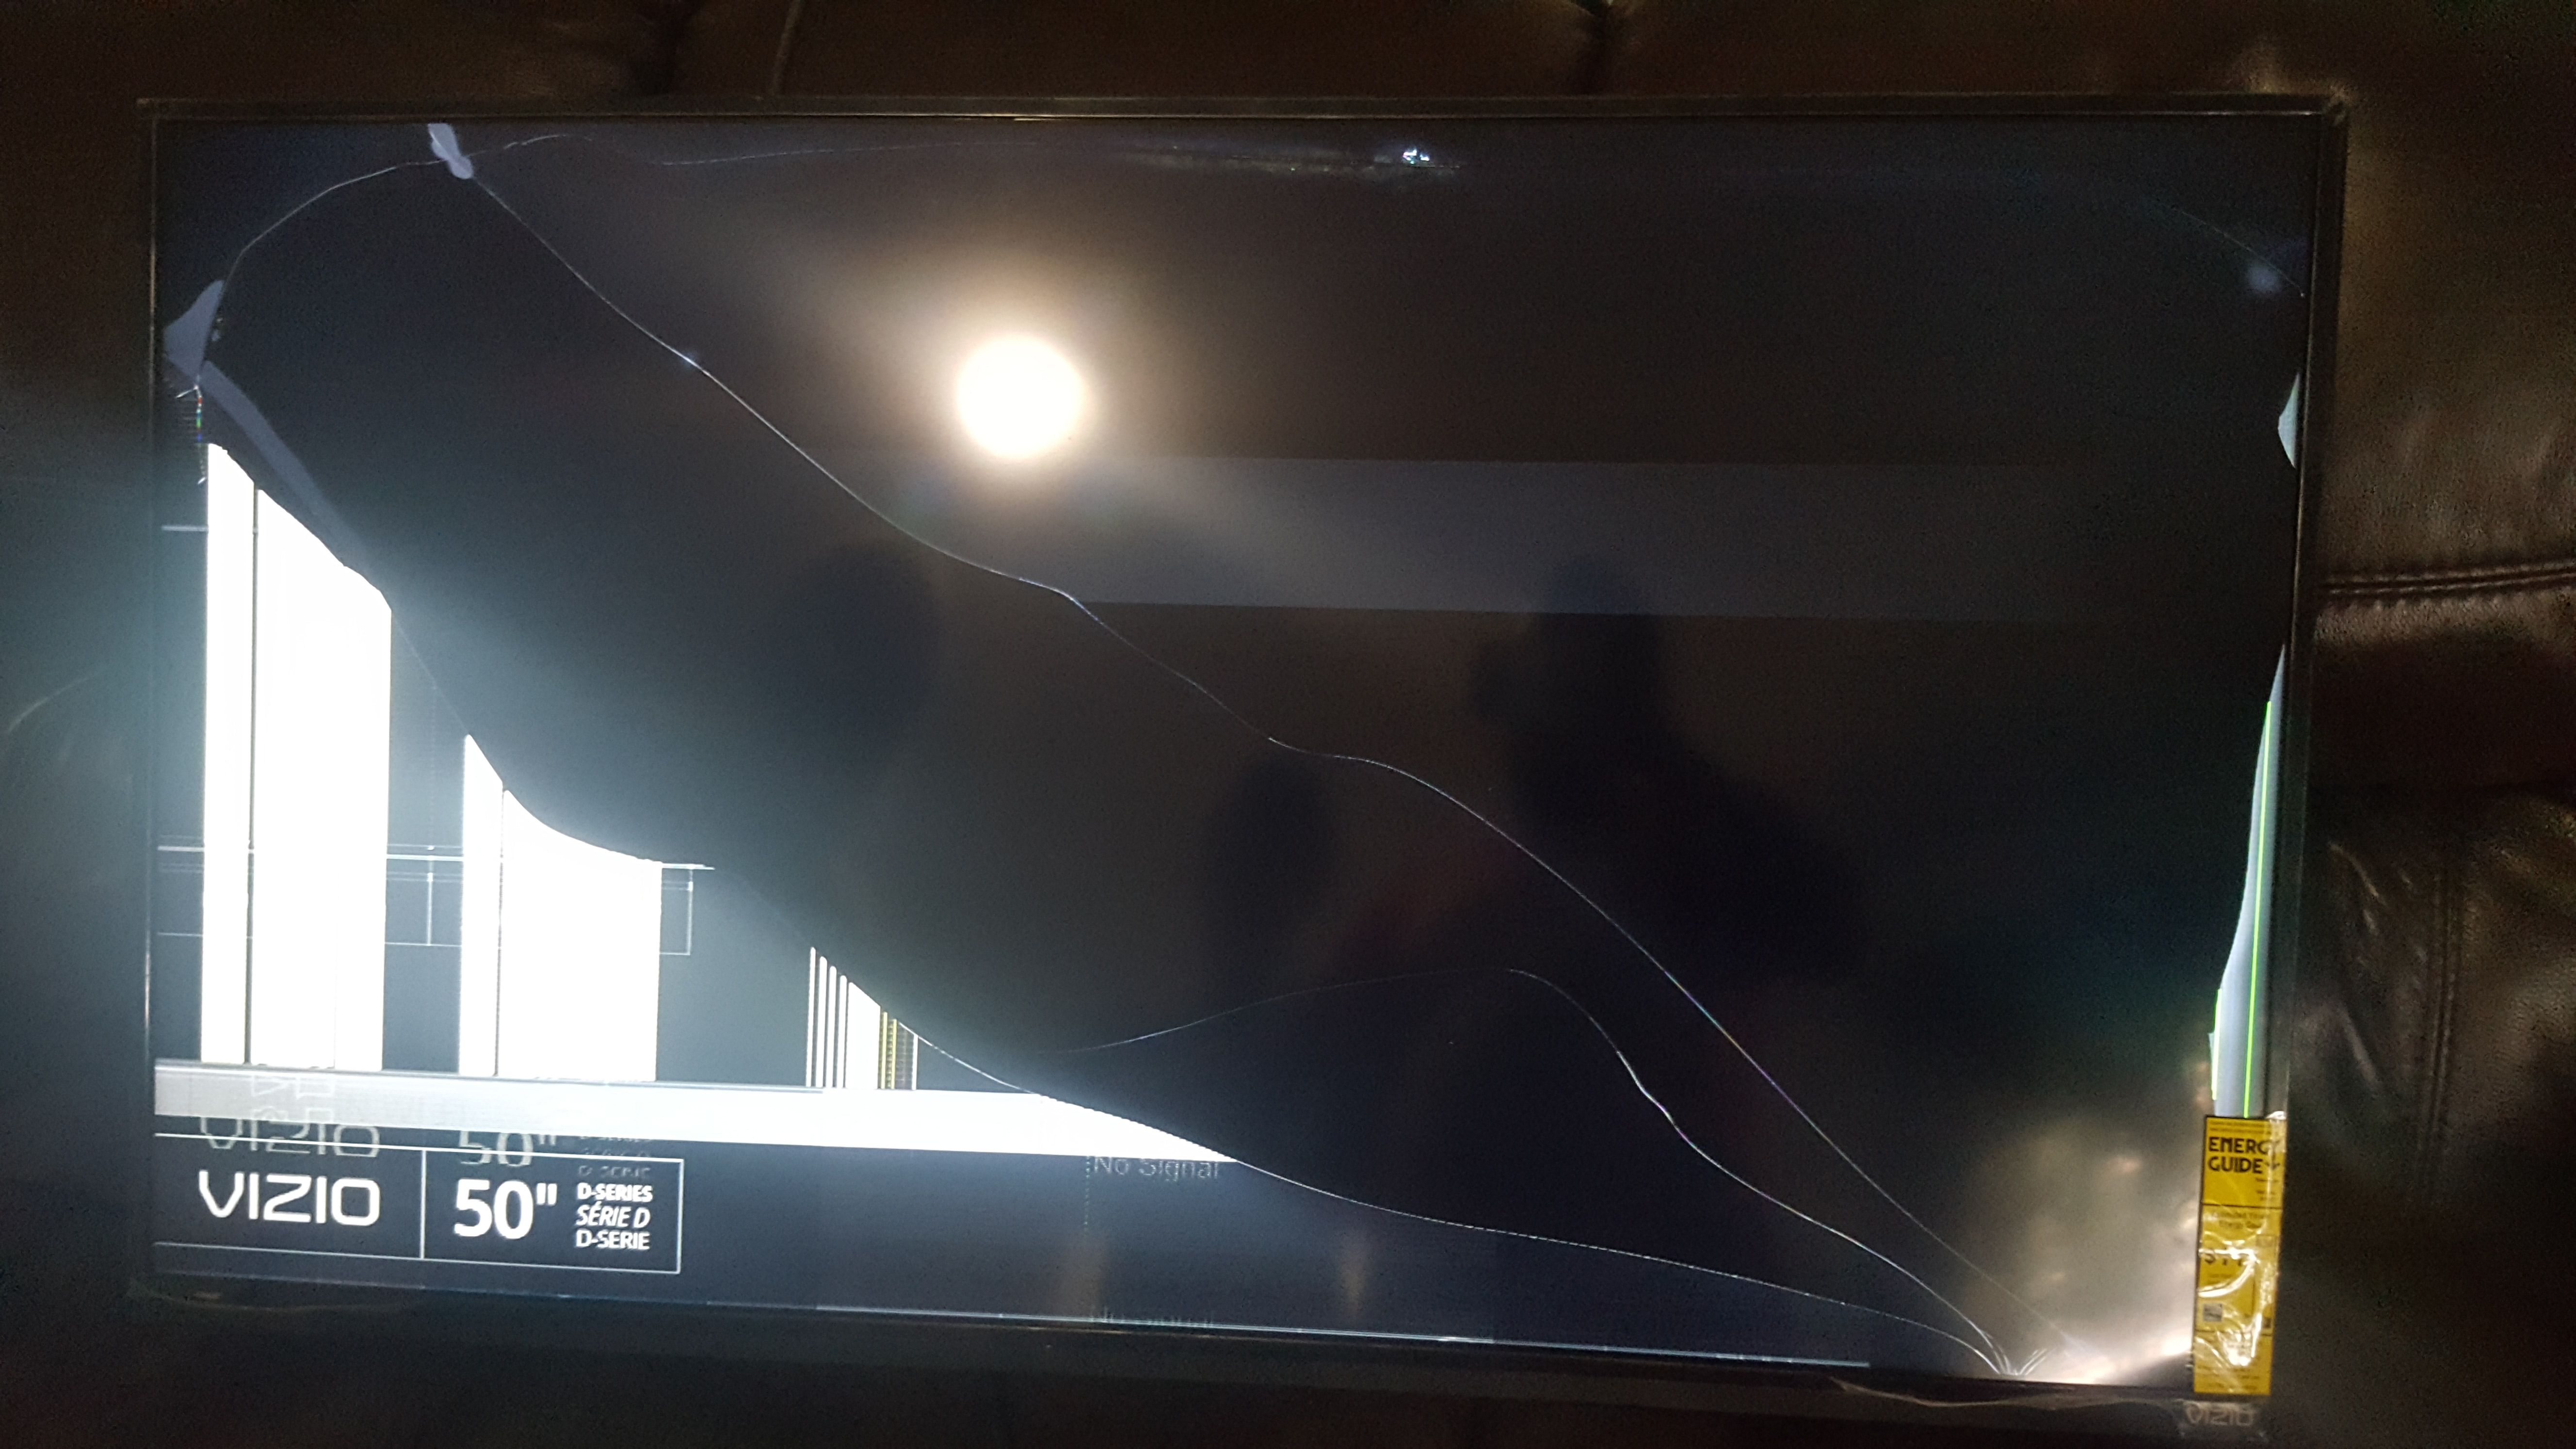 Tv 55 inch vizio broken screen